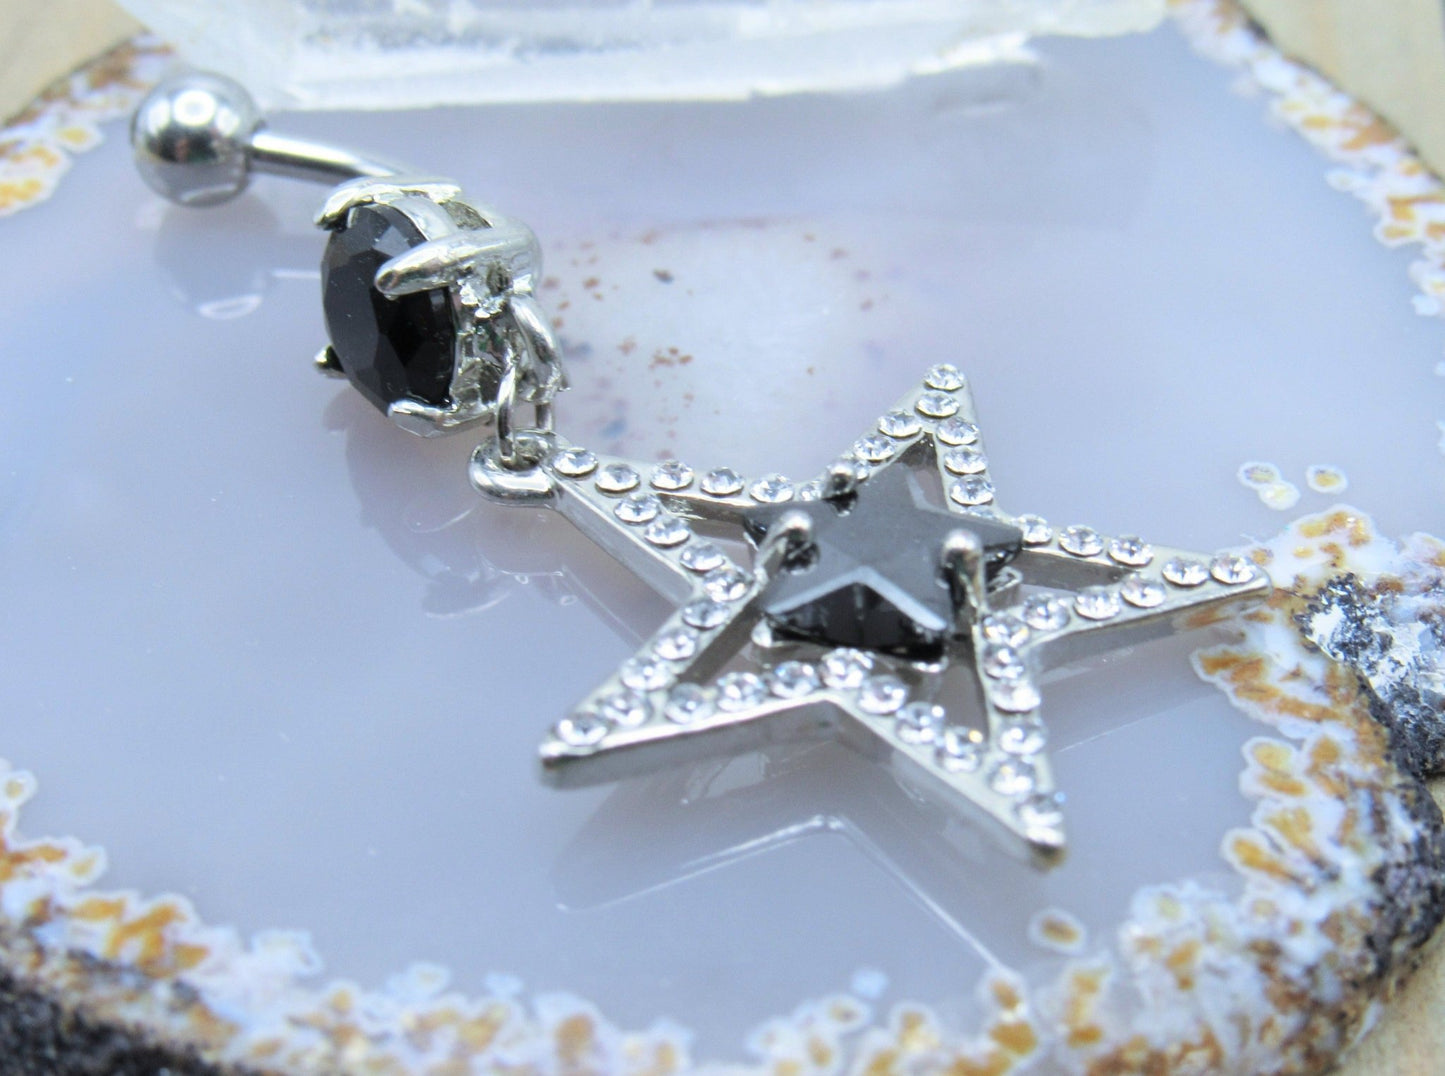 Gemstone star dangle belly button piercing ring 14g black clear cz gems 7/16" length curved bar - Siren Body Jewelry